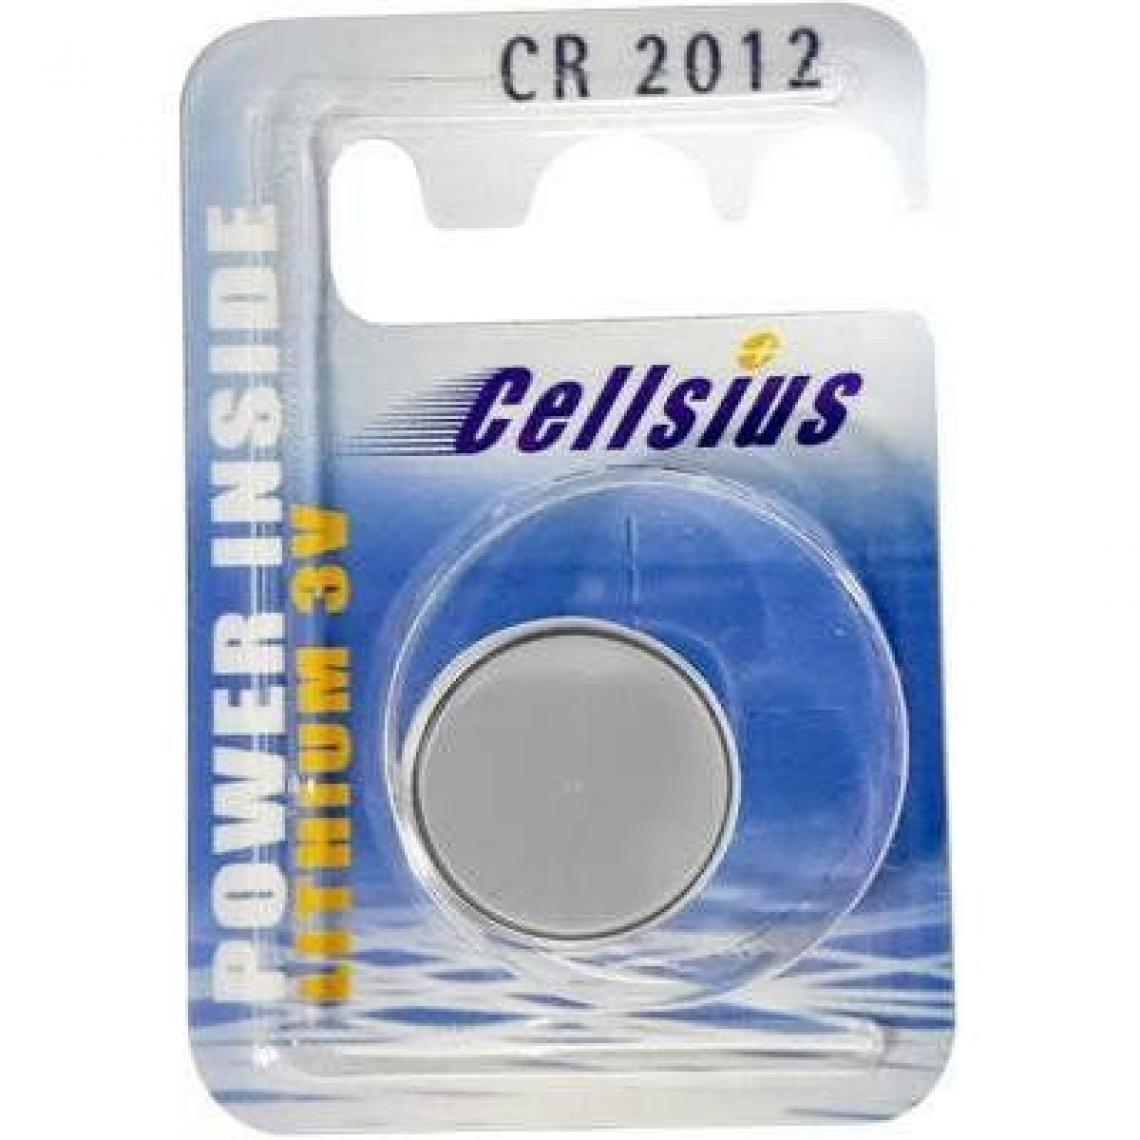 Inconnu - Cellsius Batterie Coin Batterie CR 2012 Lithium CR2012 55 mAh 3 V 1 St. - Piles standard